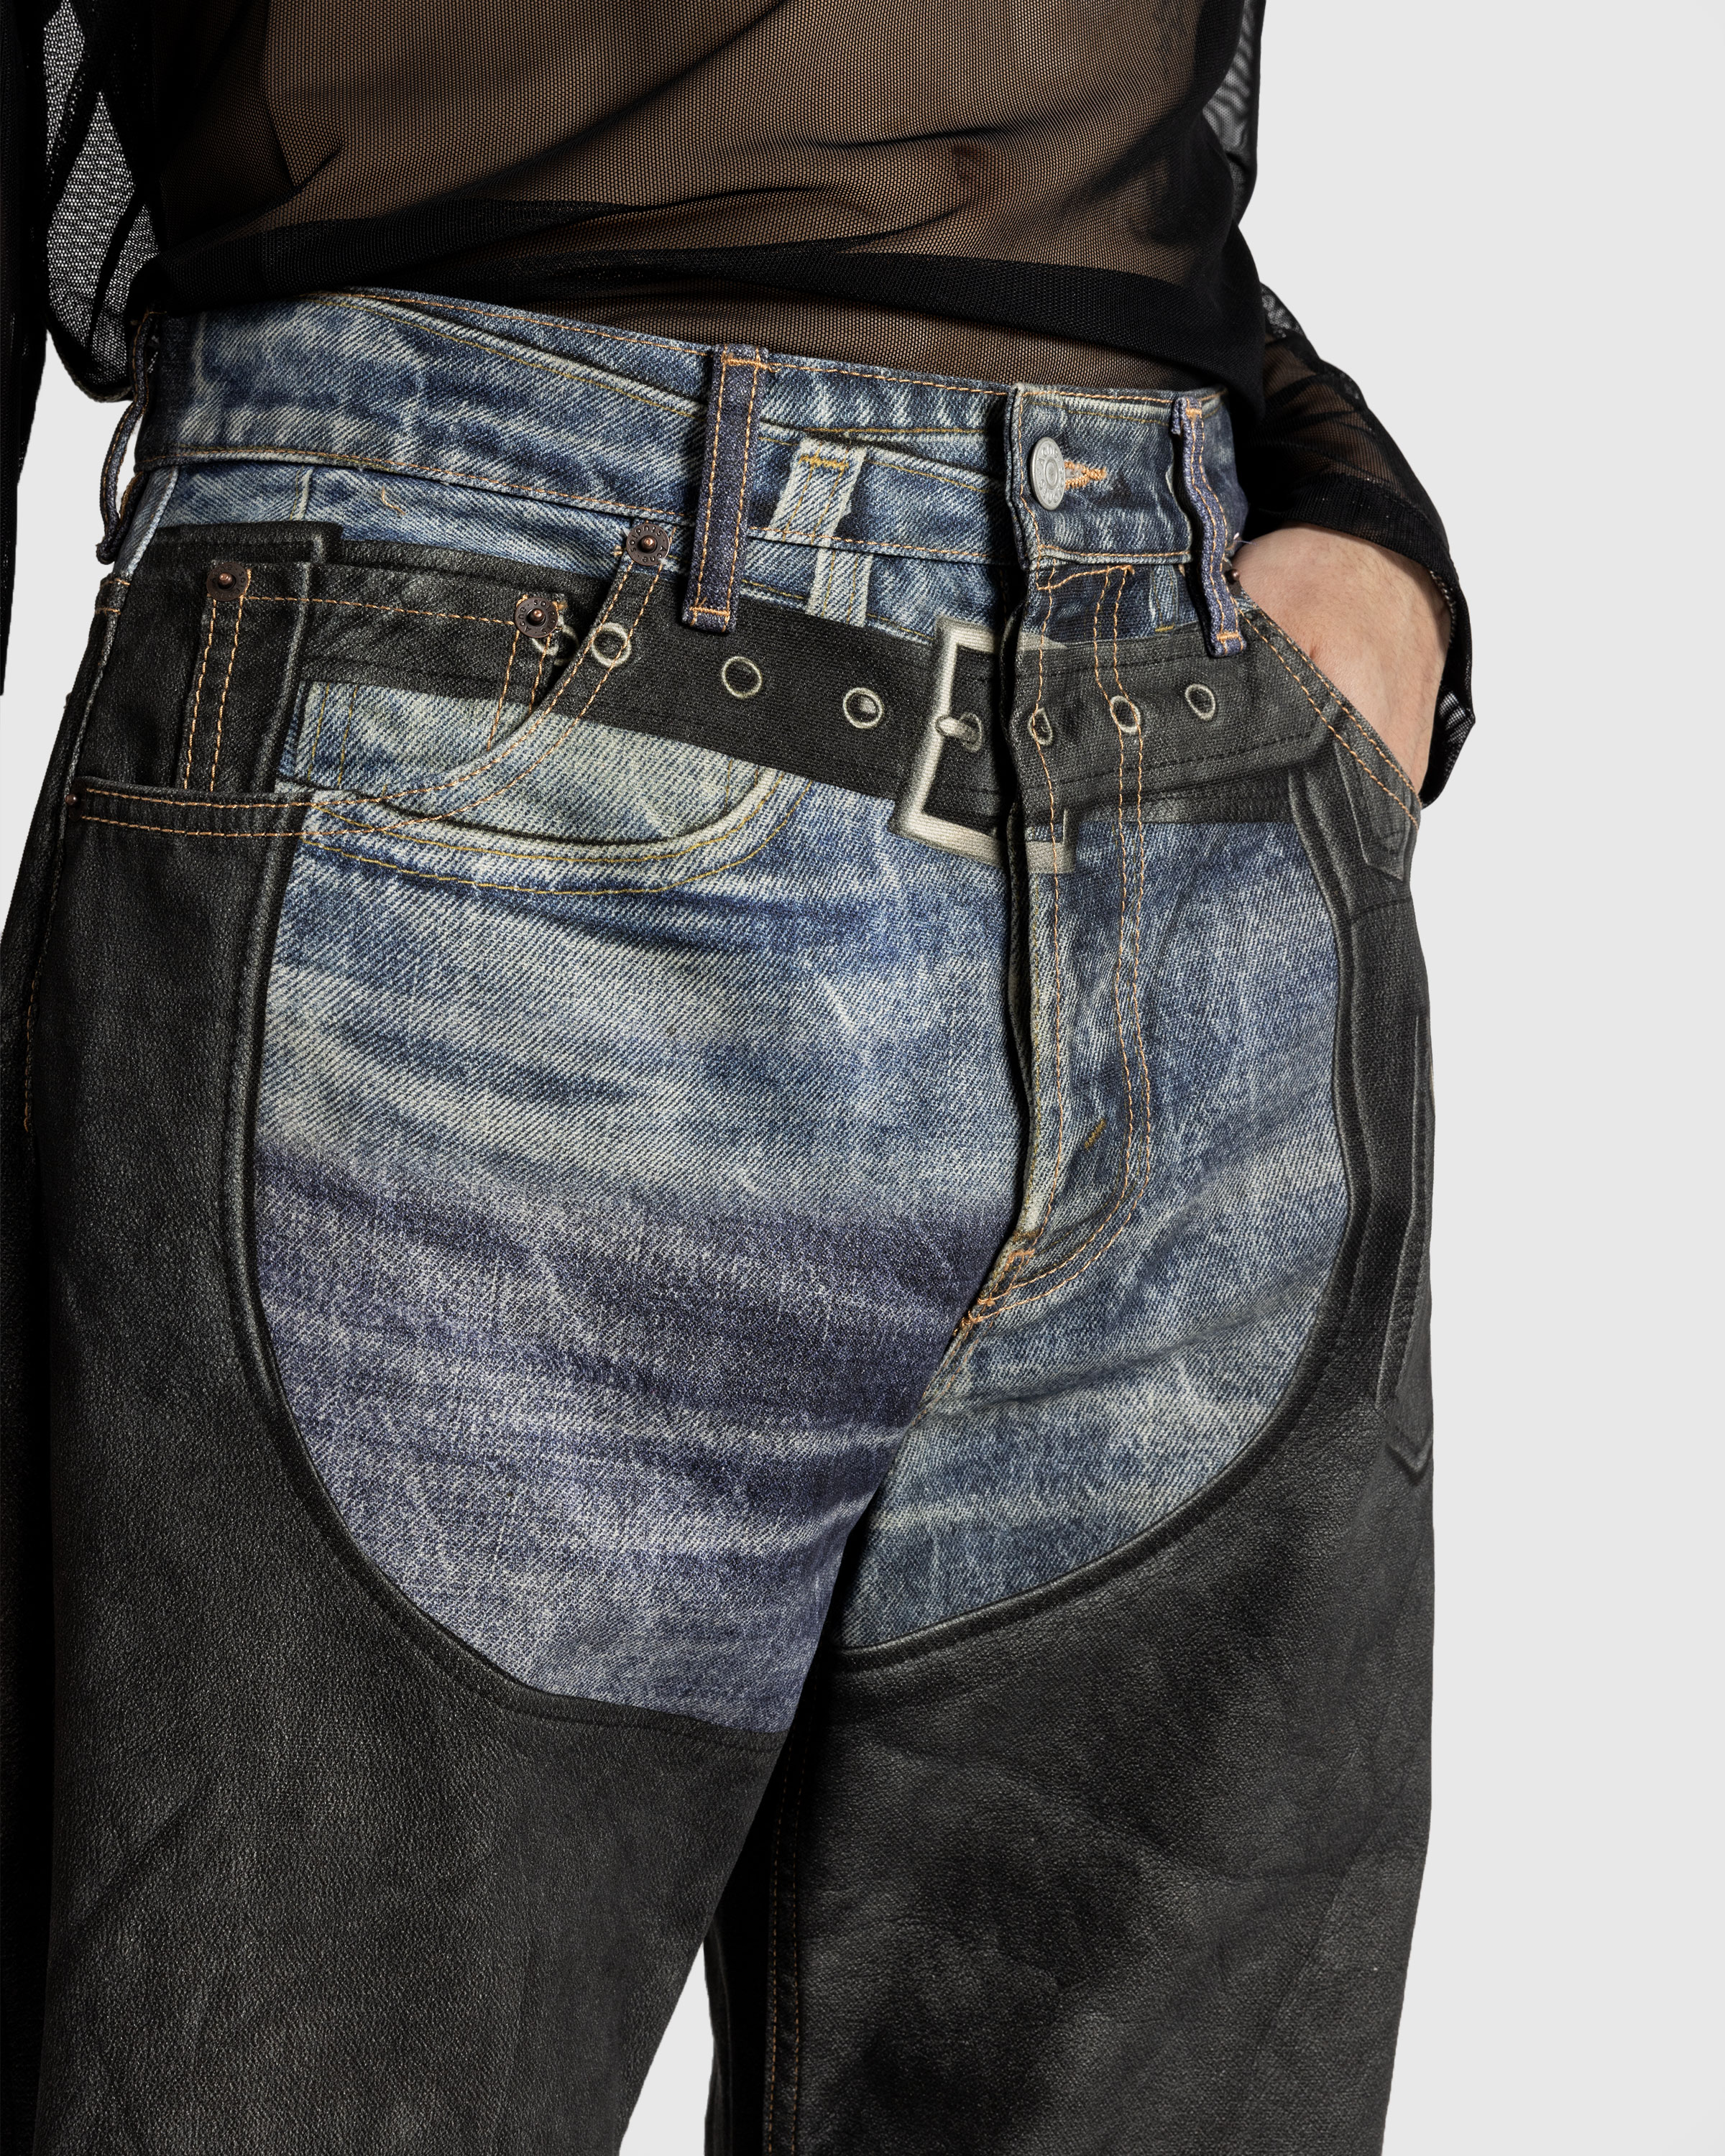 Acne Studios – Printed Trousers Blue/Black - Pants - Blue - Image 5